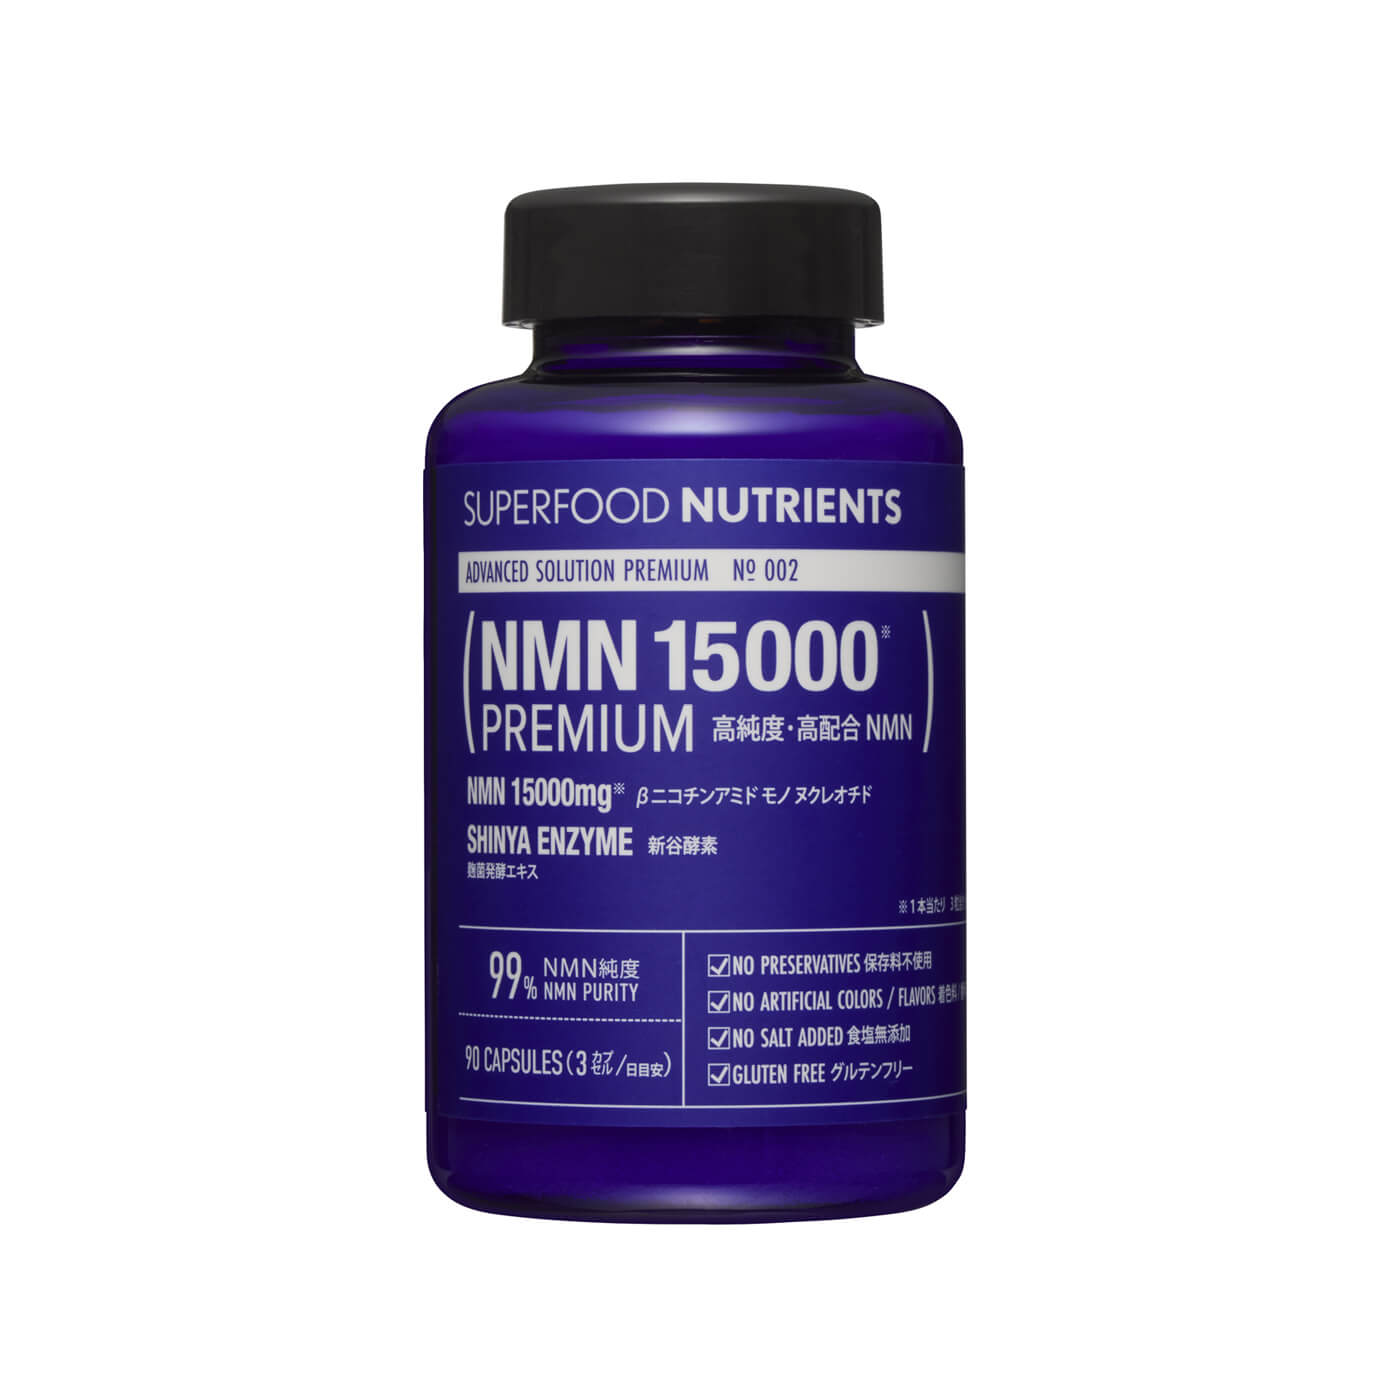 SUPERFOOD NUTRIENTS No.002 / NMN 15000 PREMIUM
